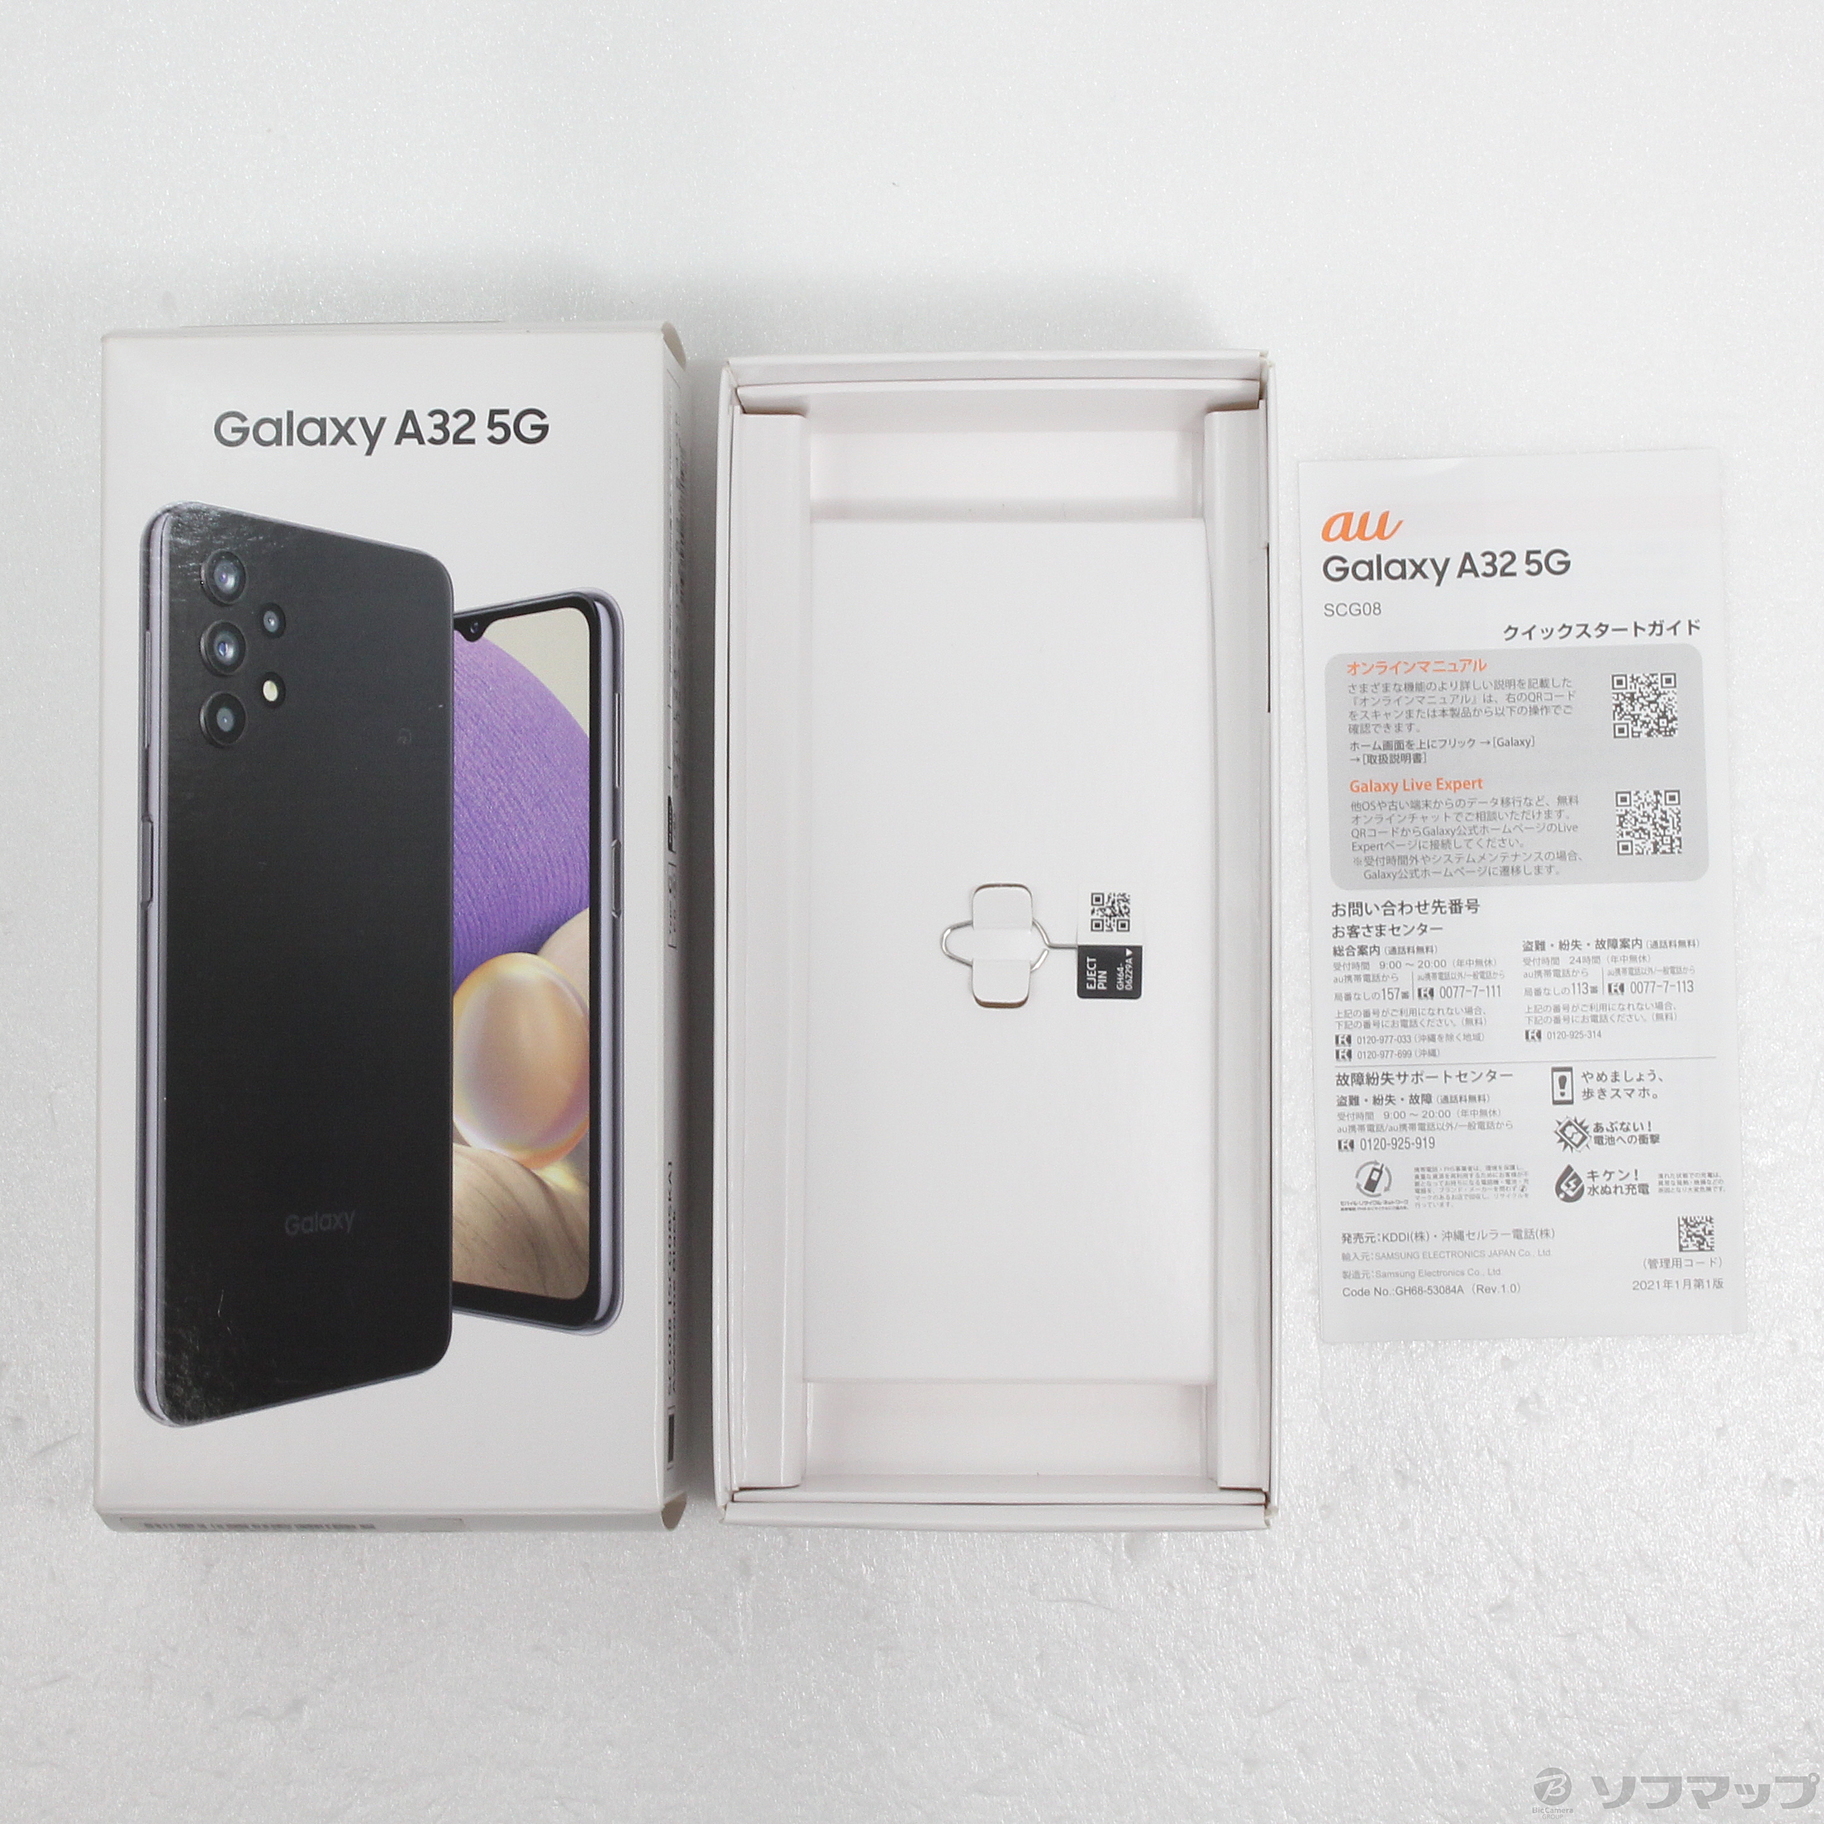 Galaxy A32 5G オーサムブラック 64GB